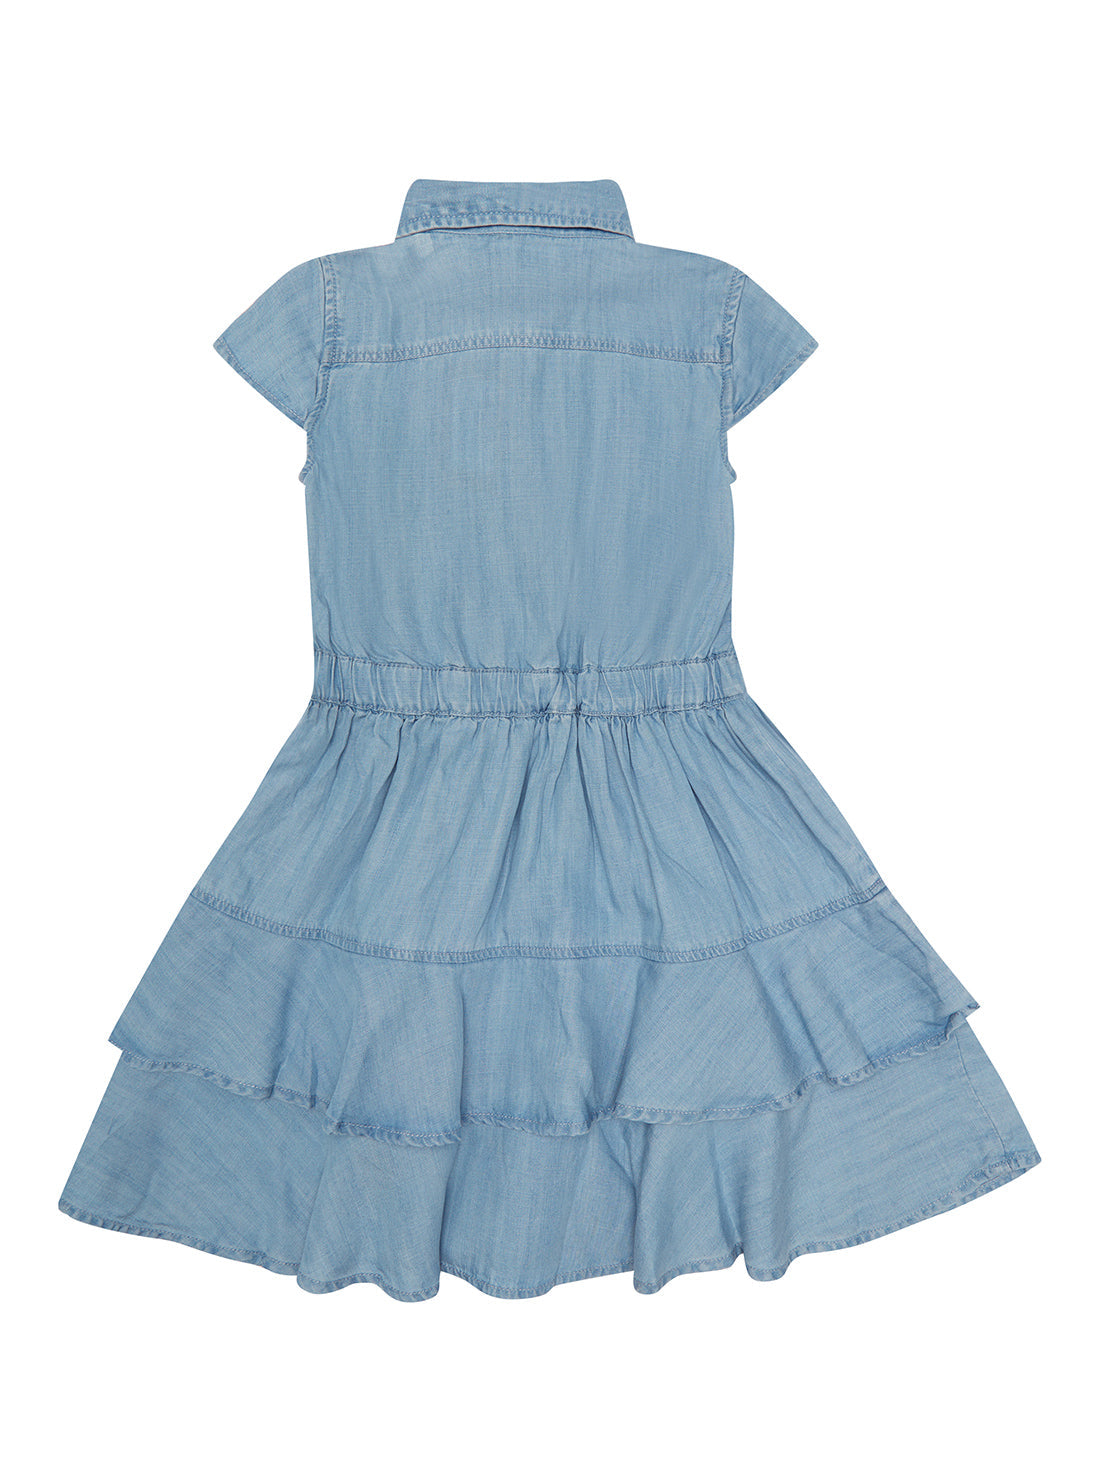 GUESS Little Girl Blue Wash Denim Dress (2-7) Back View